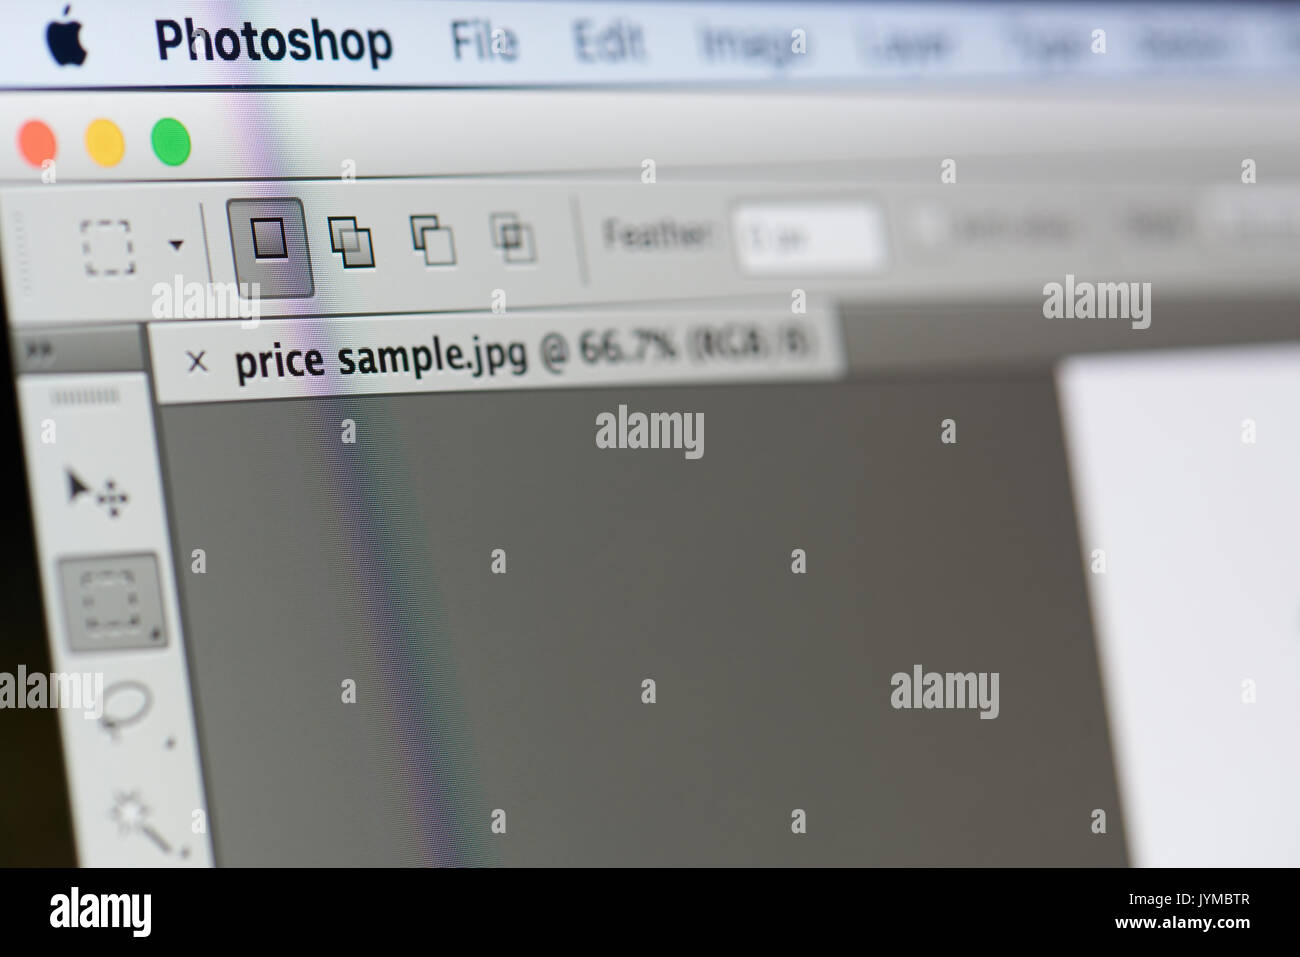 New york, USA - August 18, 2017: Adobe photoshop menu on laptop screen close-up Stock Photo